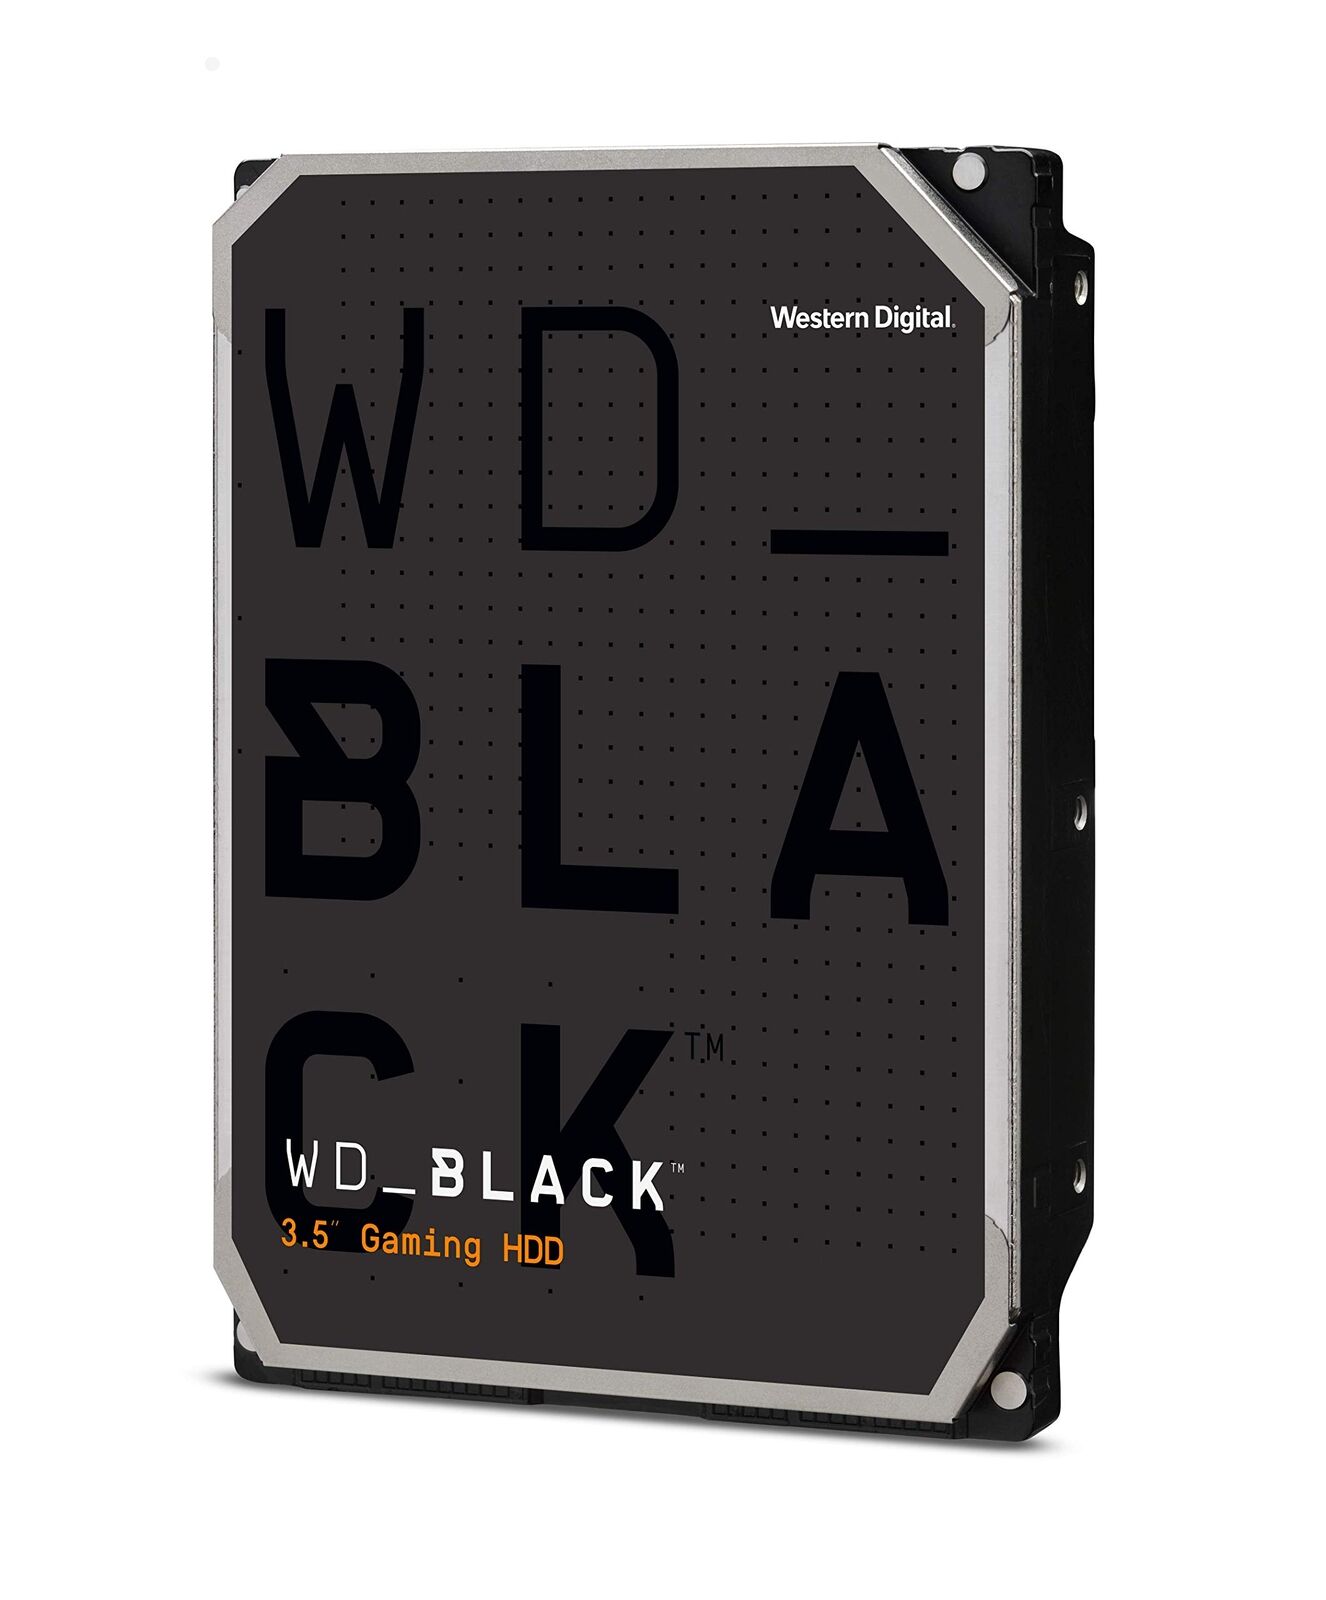 WD 2 TB Performance Hard Drive - Black Standard Packaging